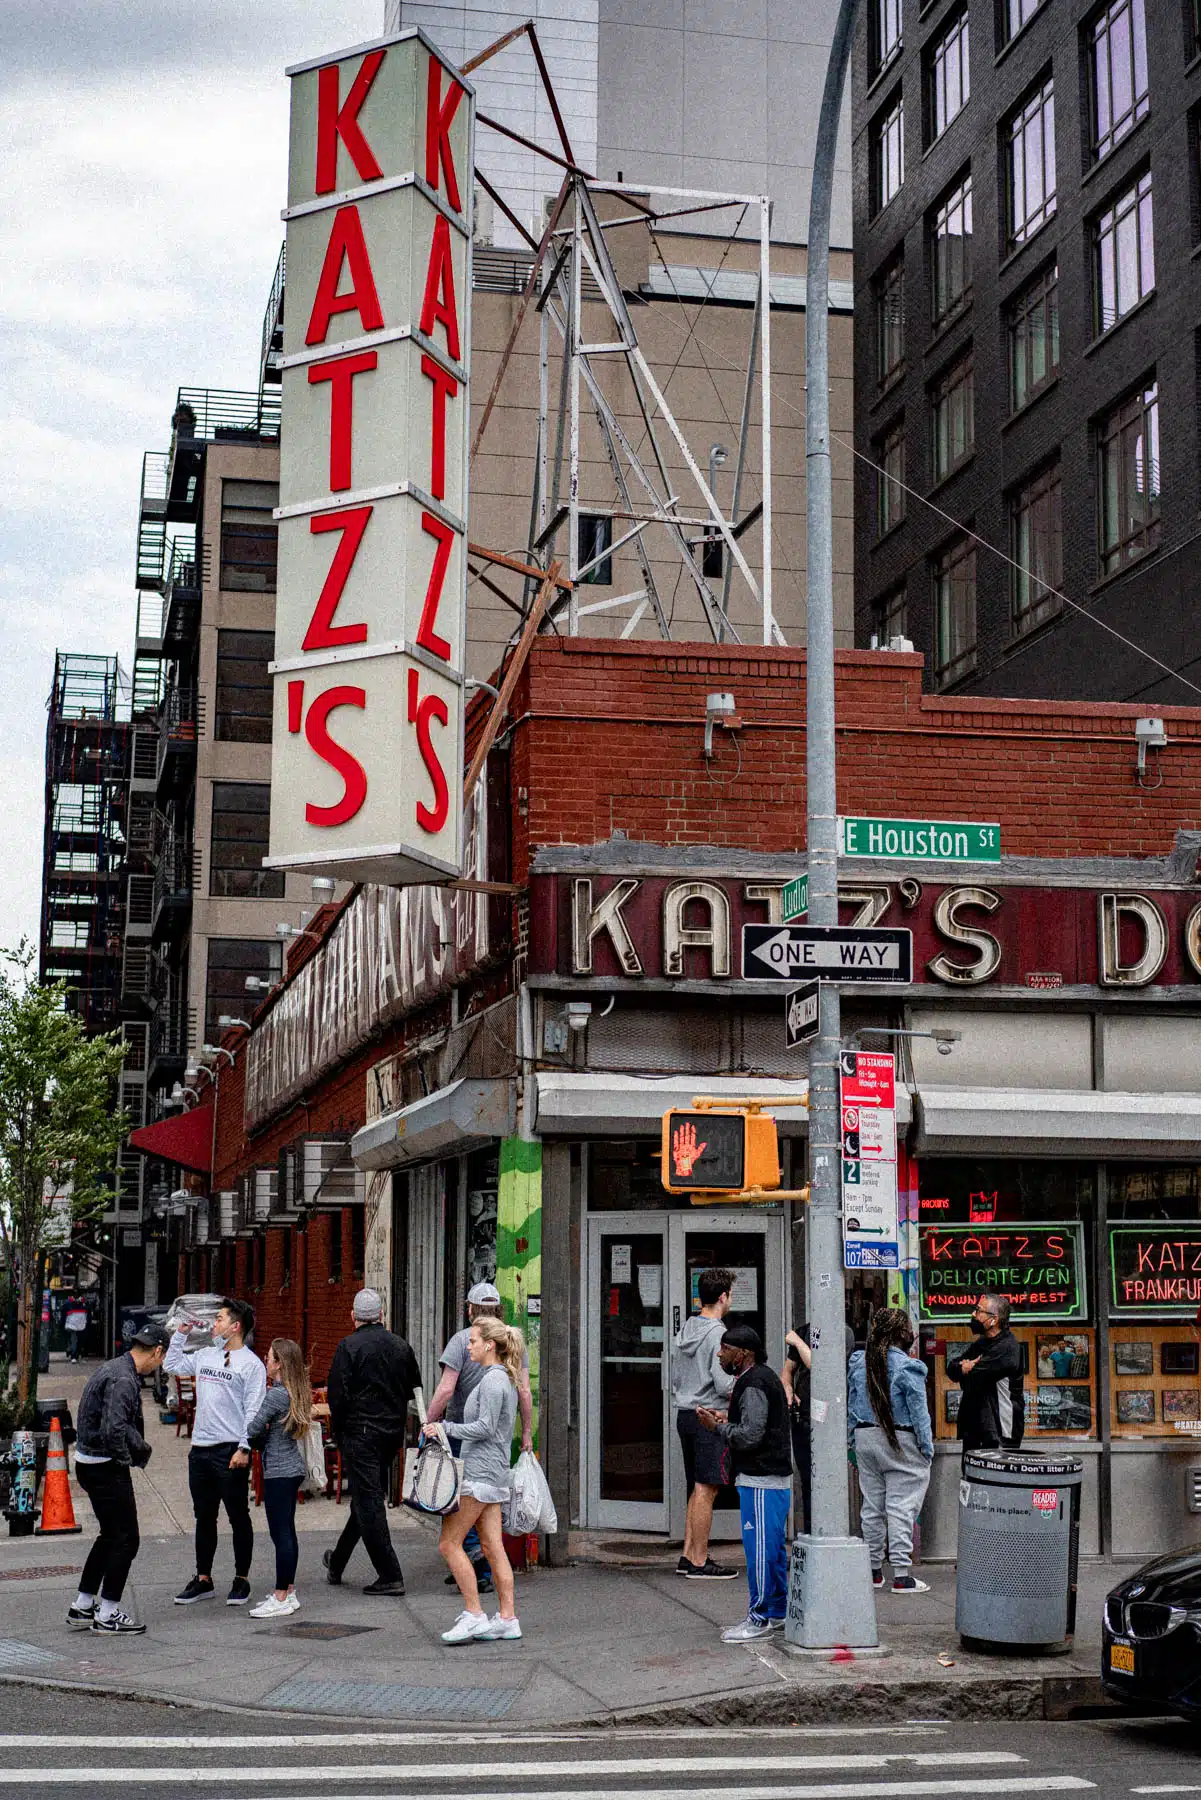 Most Iconic restaurants New York City